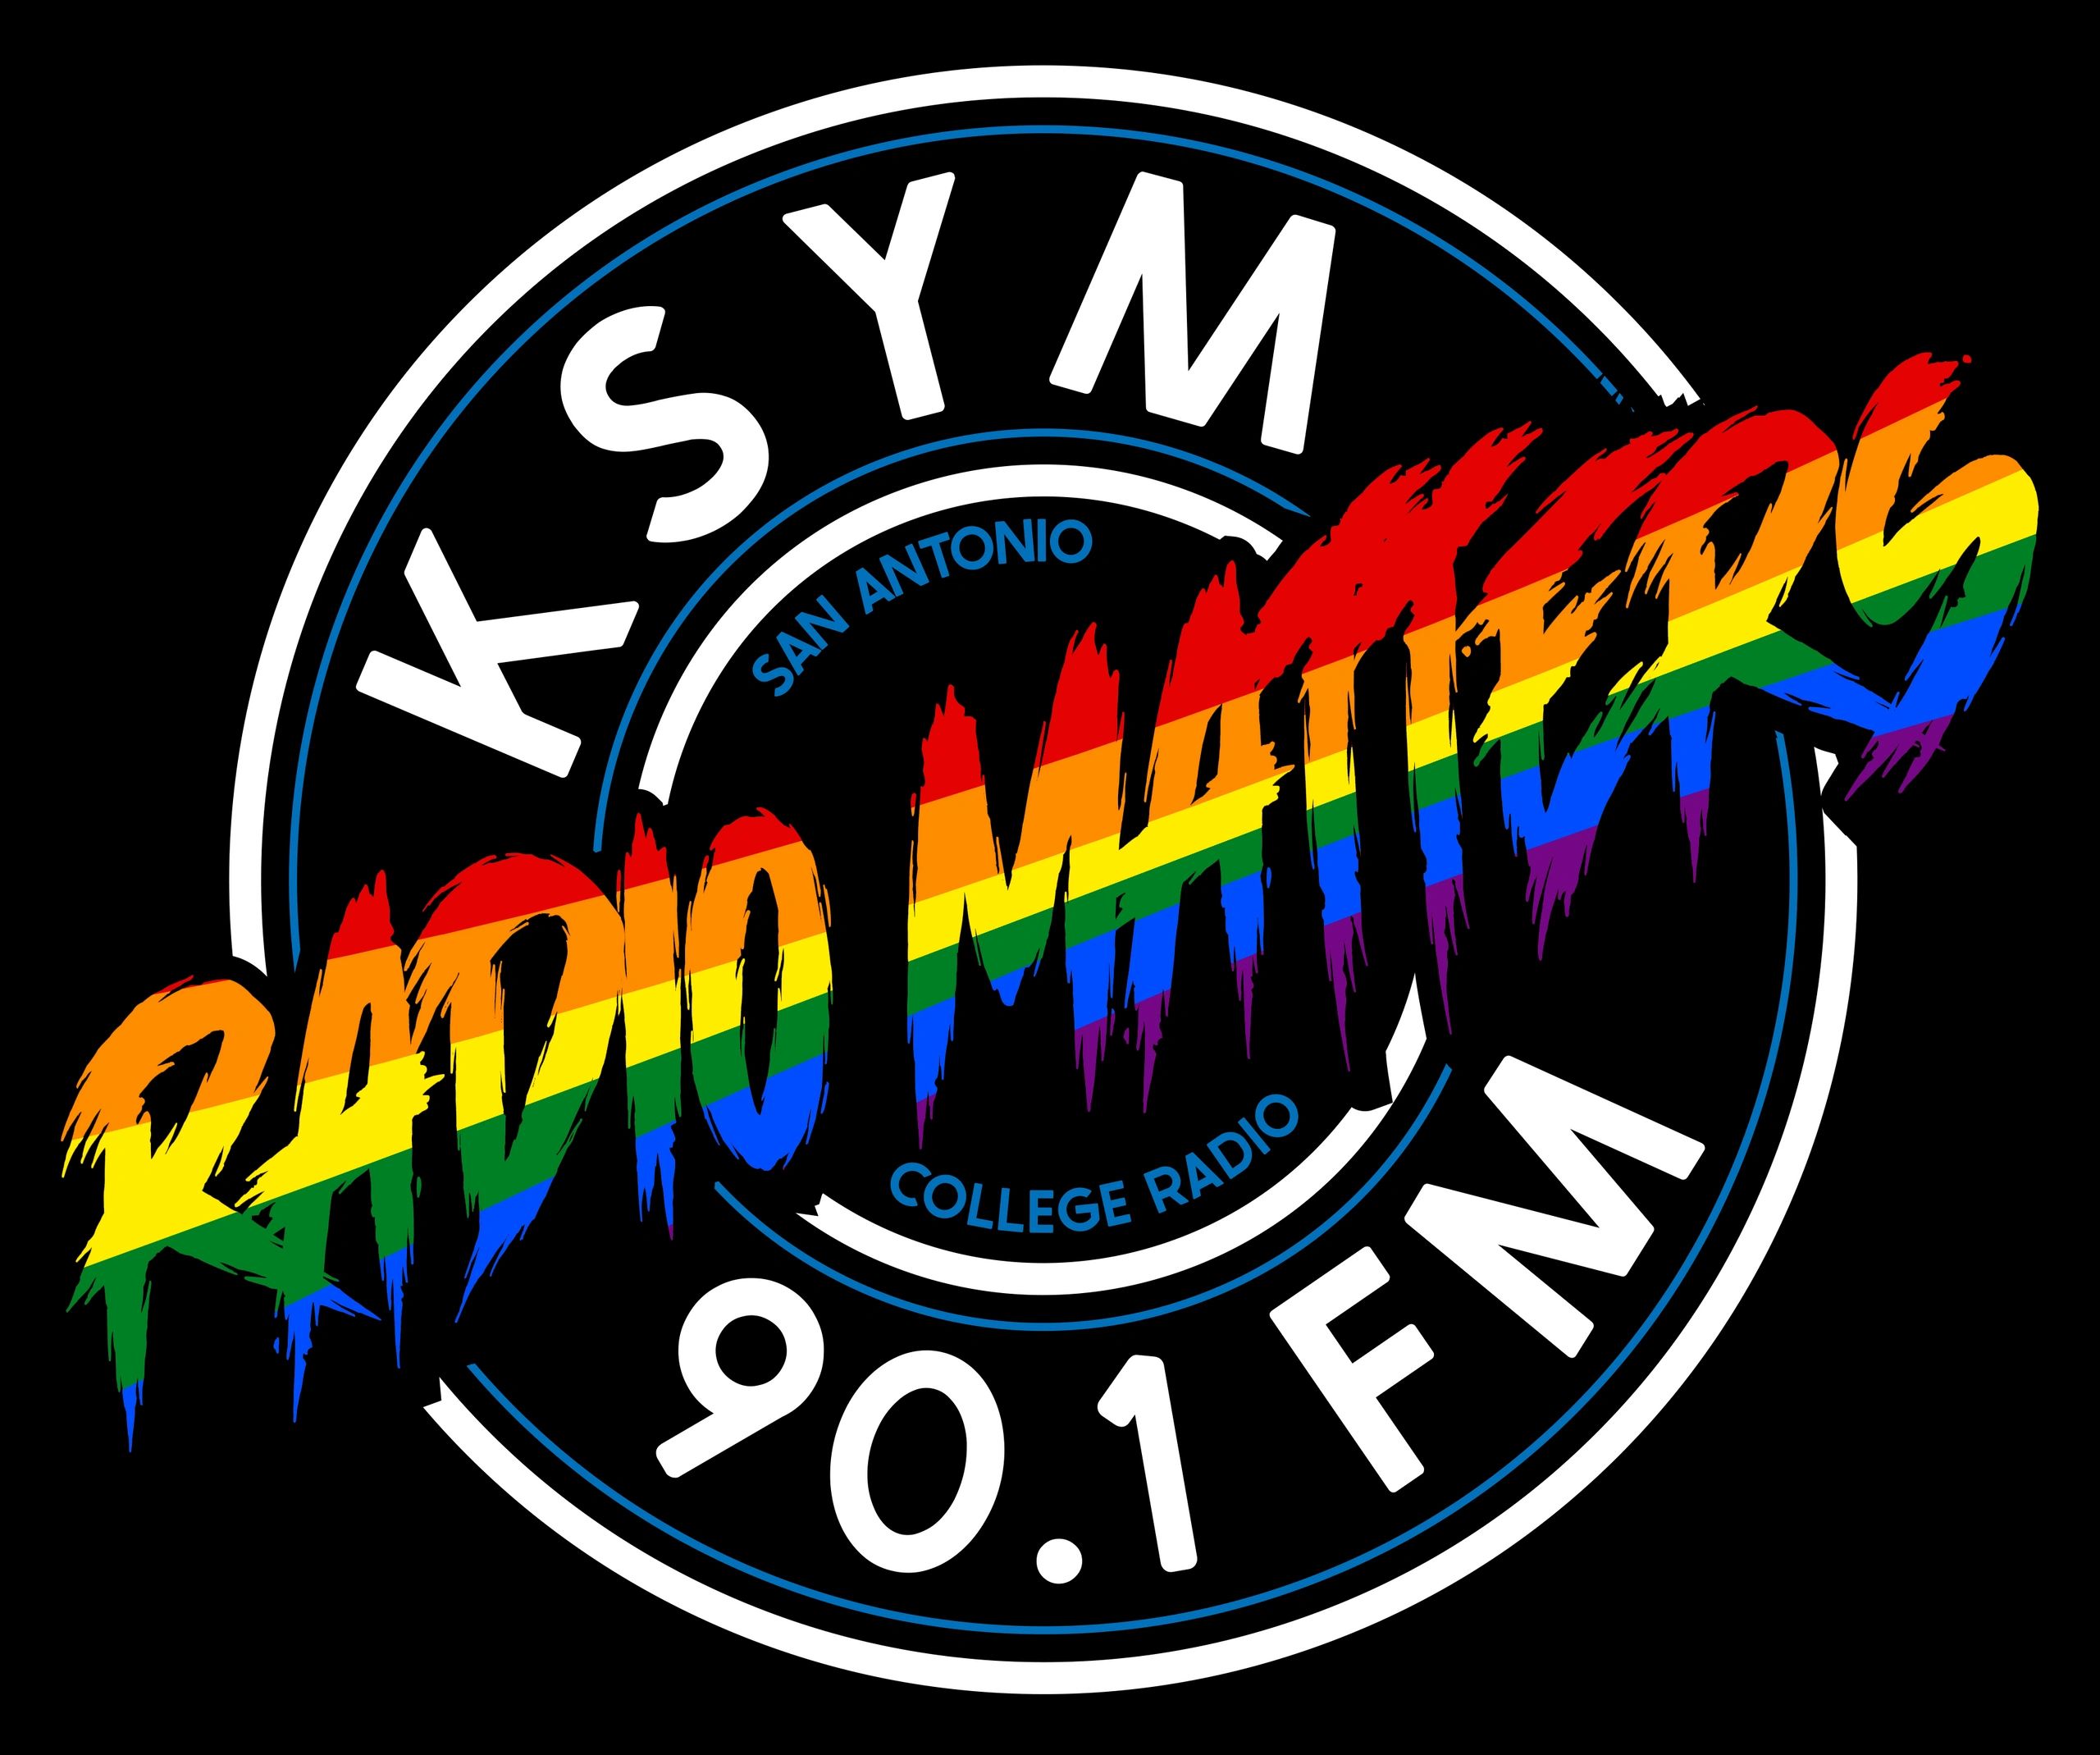 KSYM - San Antonio College Radio